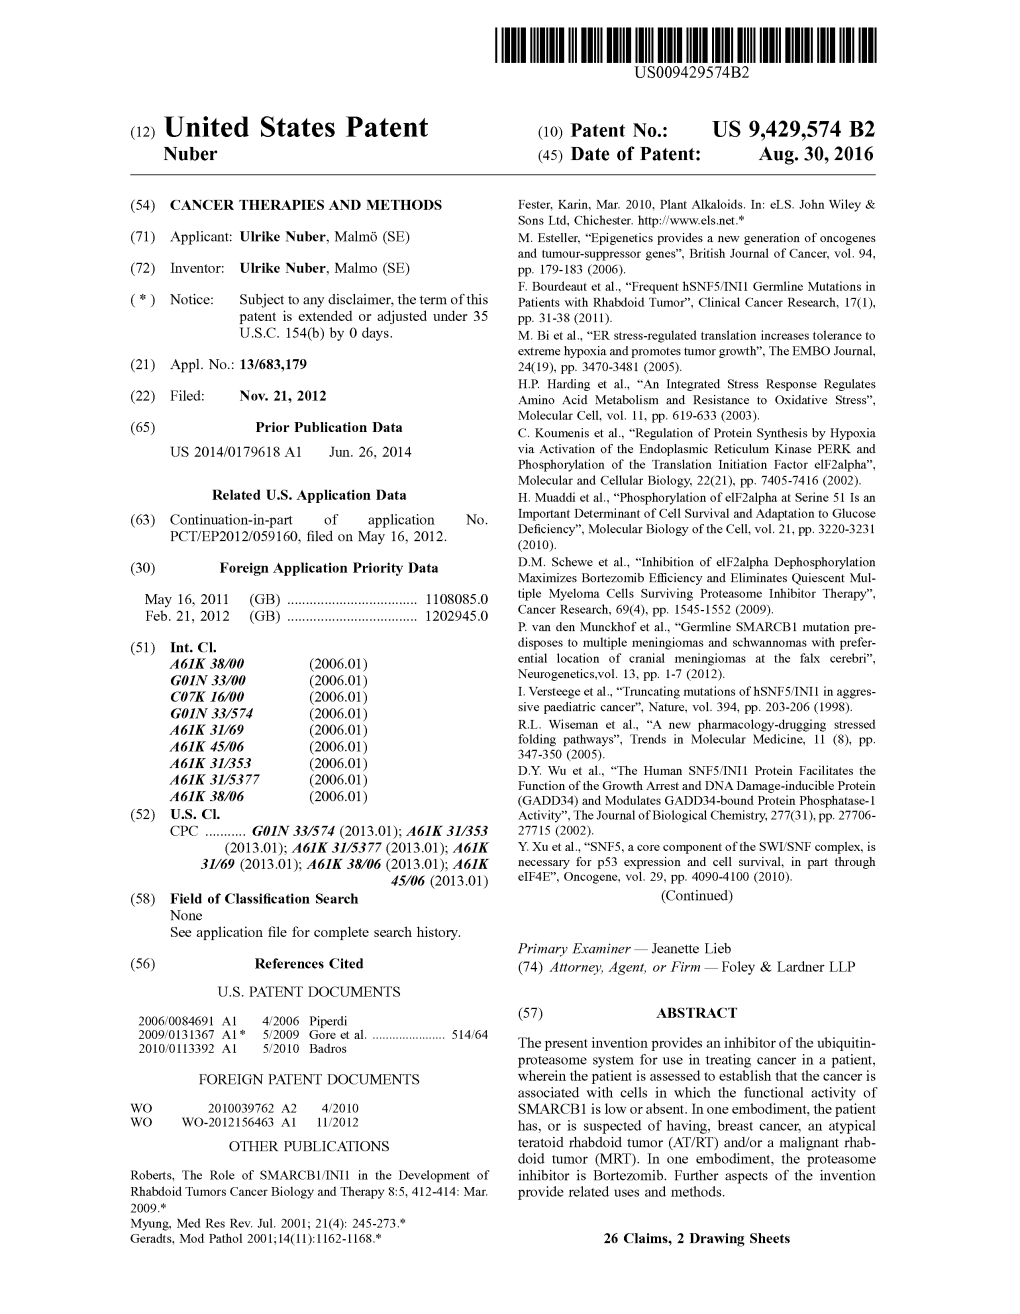 (12) United States Patent (10) Patent No.: US 9,429,574 B2 Nuber (45) Date of Patent: Aug